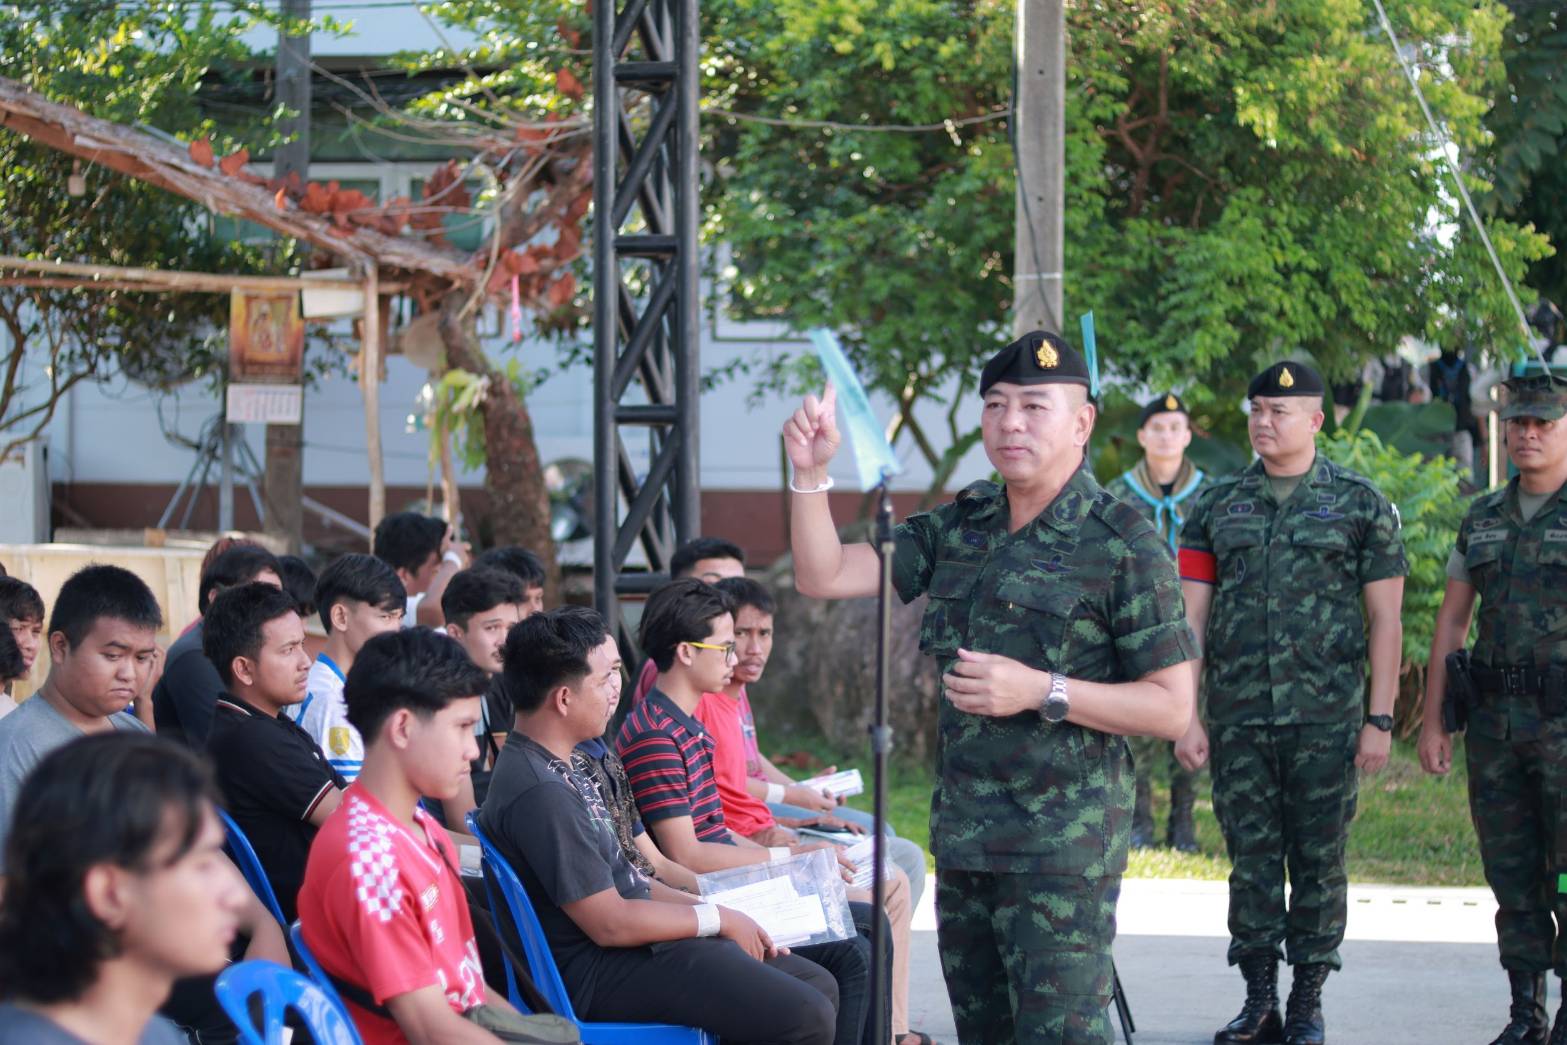 ️แม่ทัพภาคที่ 4 ตรวจเยี่ยมหน่วยตรวจเลือกทหารฯ ในพื้นที่ จชต. “ย้ำทุกขั้นตอนต้องโปร่งใส และเป็นไปตามระเบียบ พร้อมเชิญชวนชายไทยสมัครใจเป็นทหาร“